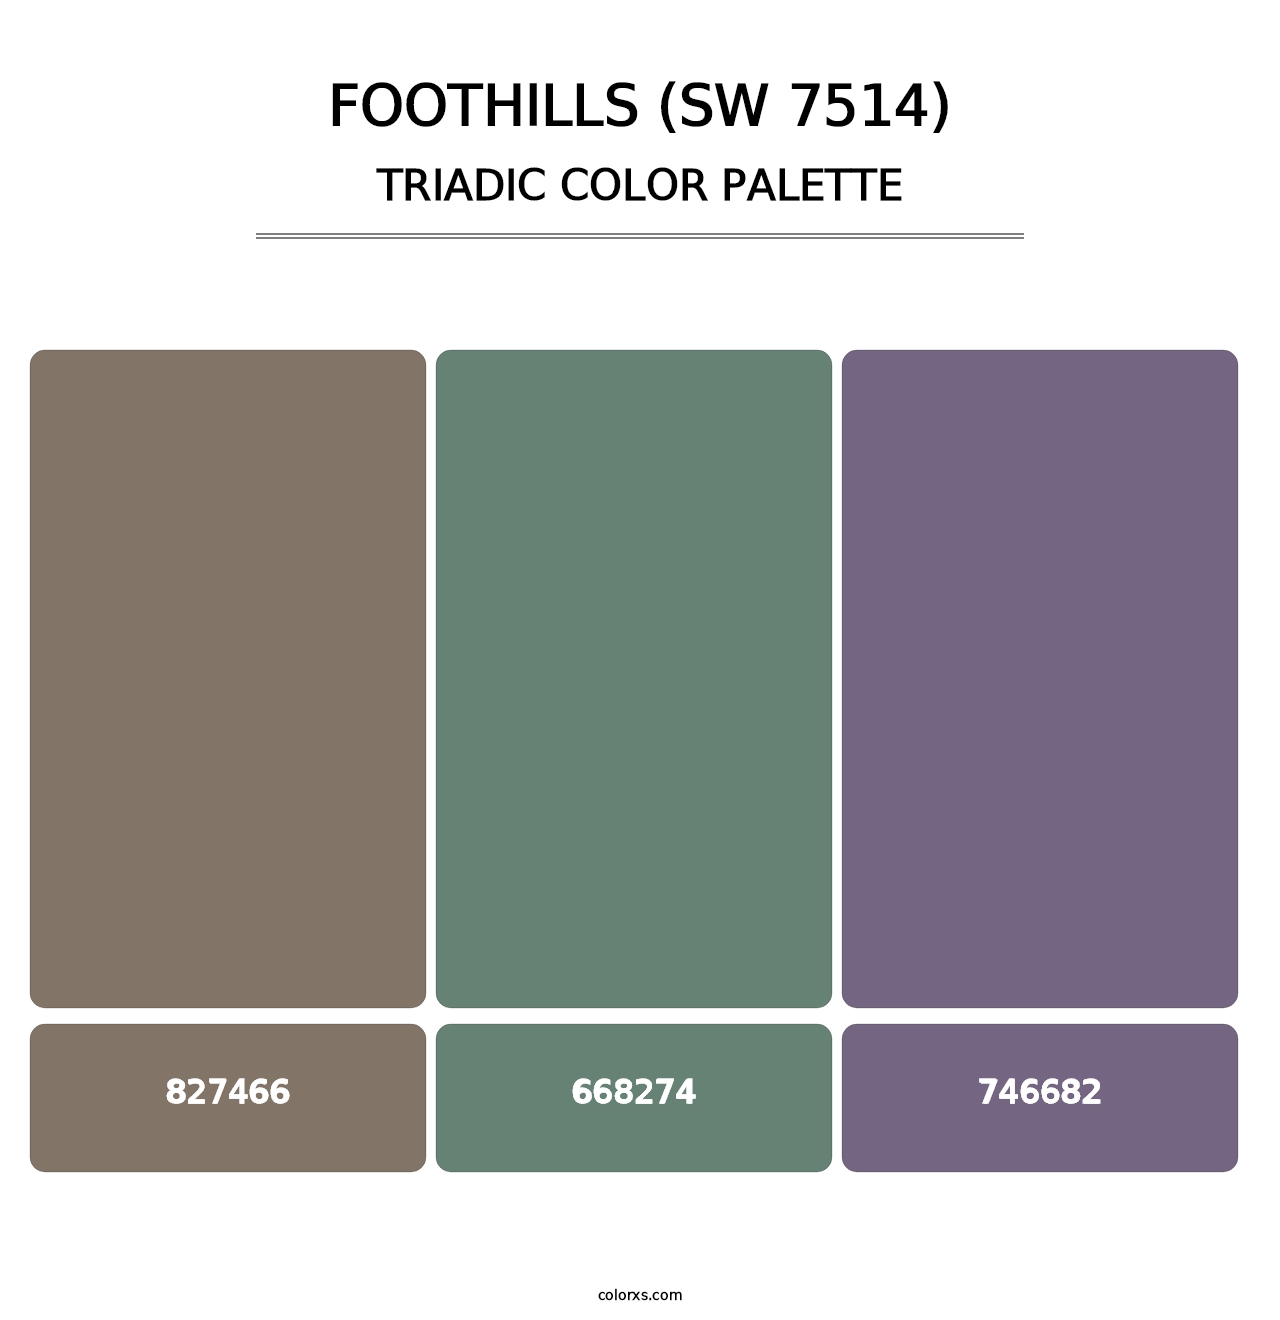 Foothills (SW 7514) - Triadic Color Palette